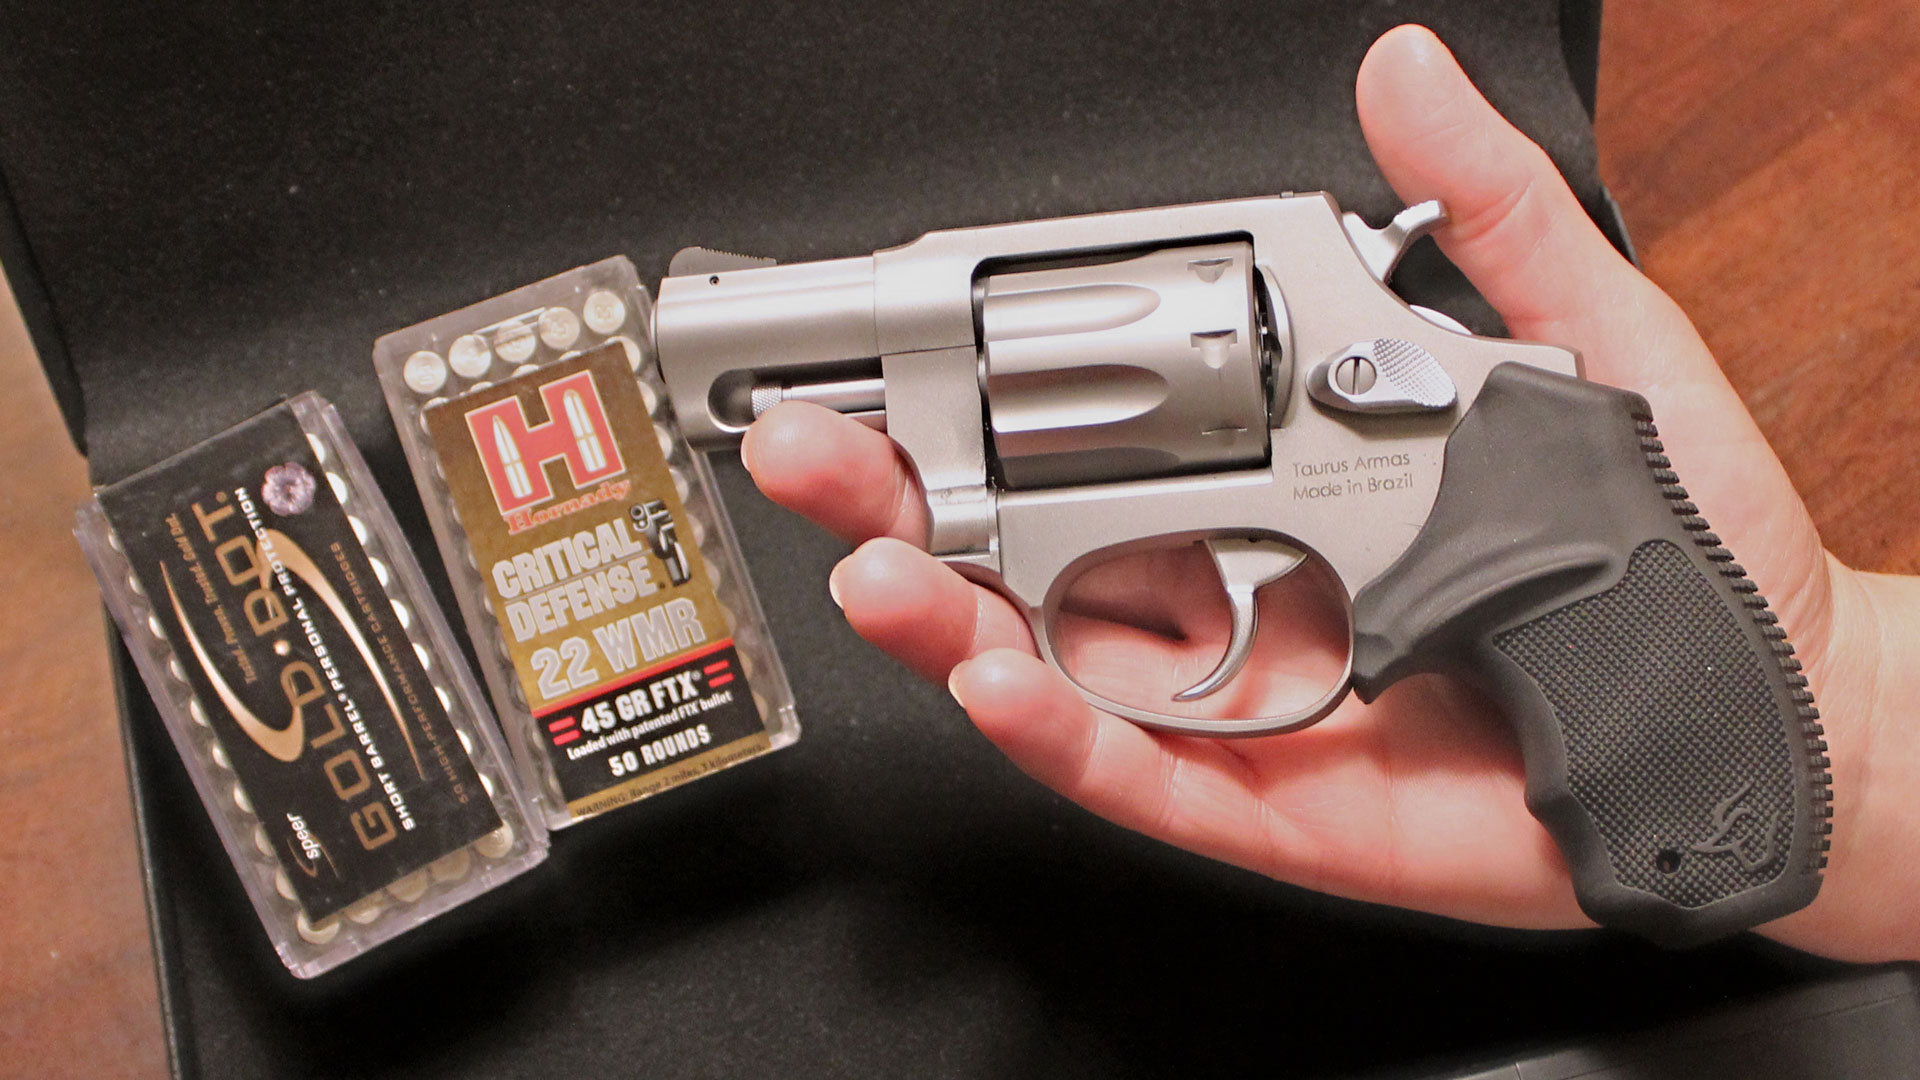 22 Pistol Revolver Magnum